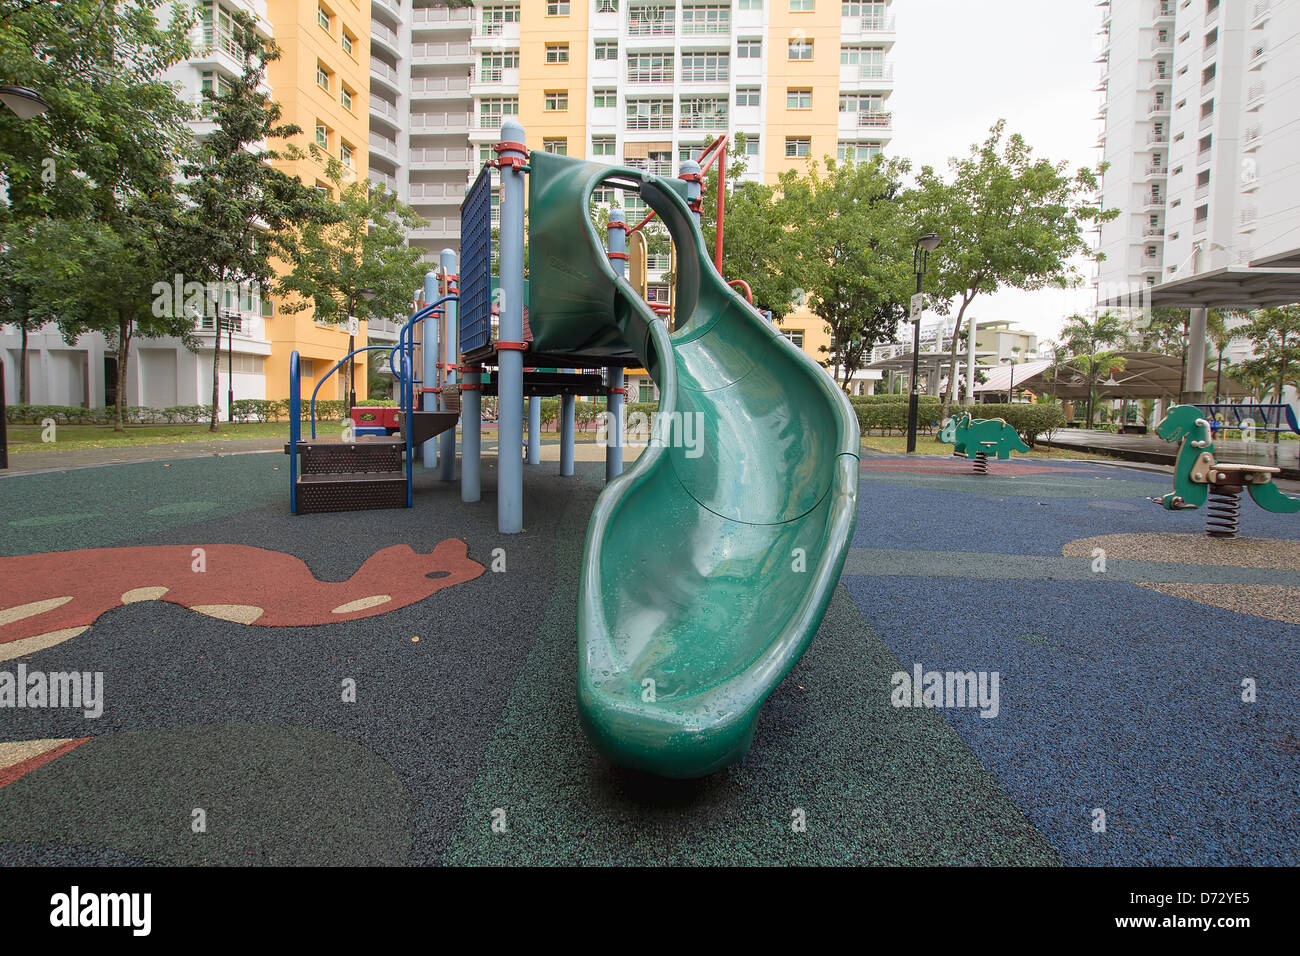 Singapore Public Housing Apartments Slide at Children Playground in Punggol District Stock Photo